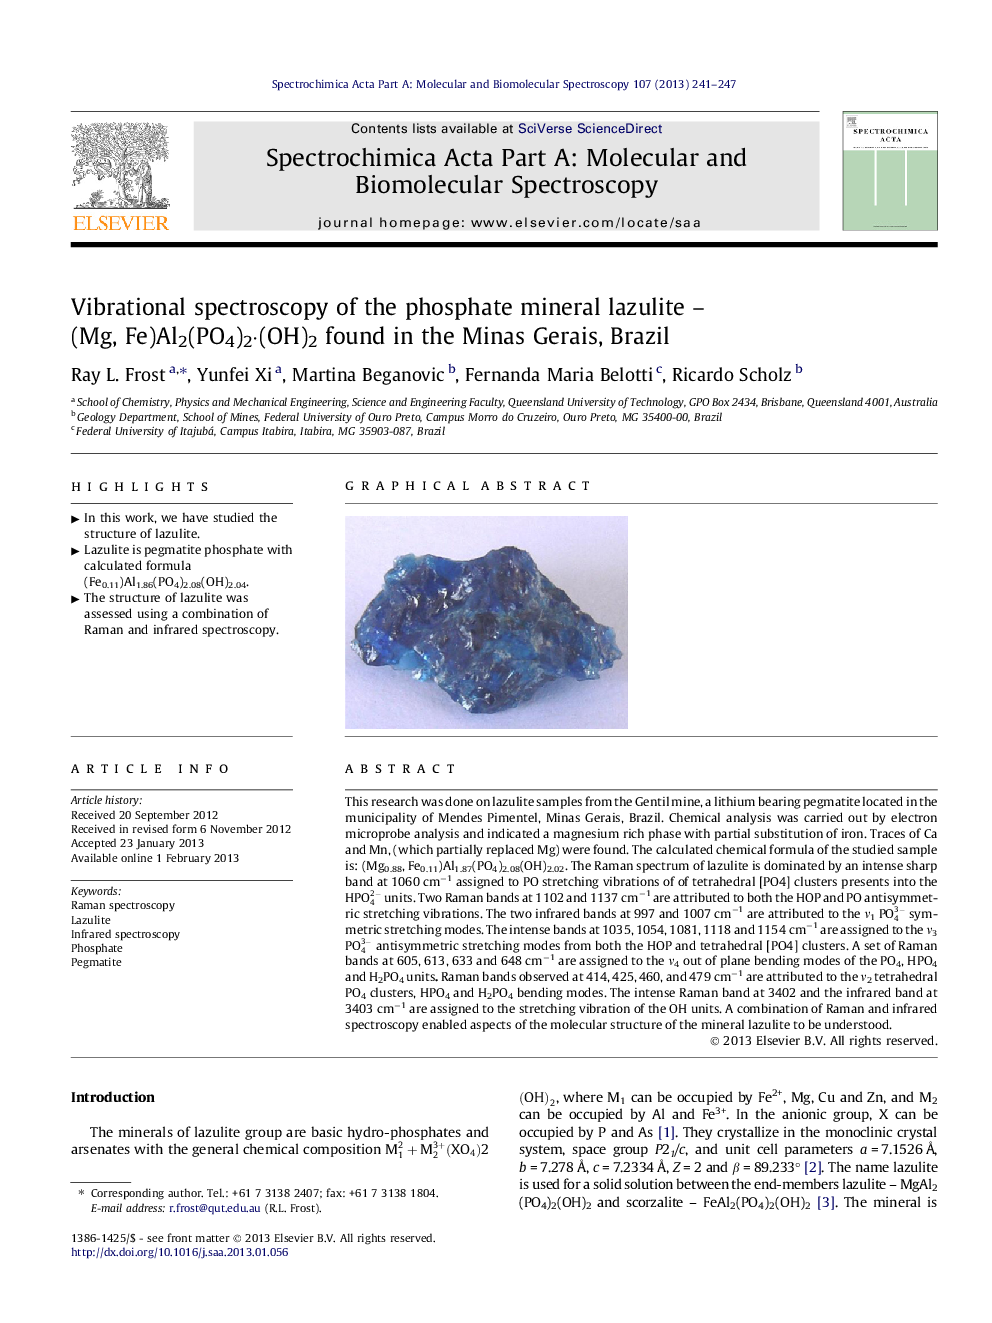 Vibrational spectroscopy of the phosphate mineral lazulite – (Mg, Fe)Al2(PO4)2·(OH)2 found in the Minas Gerais, Brazil